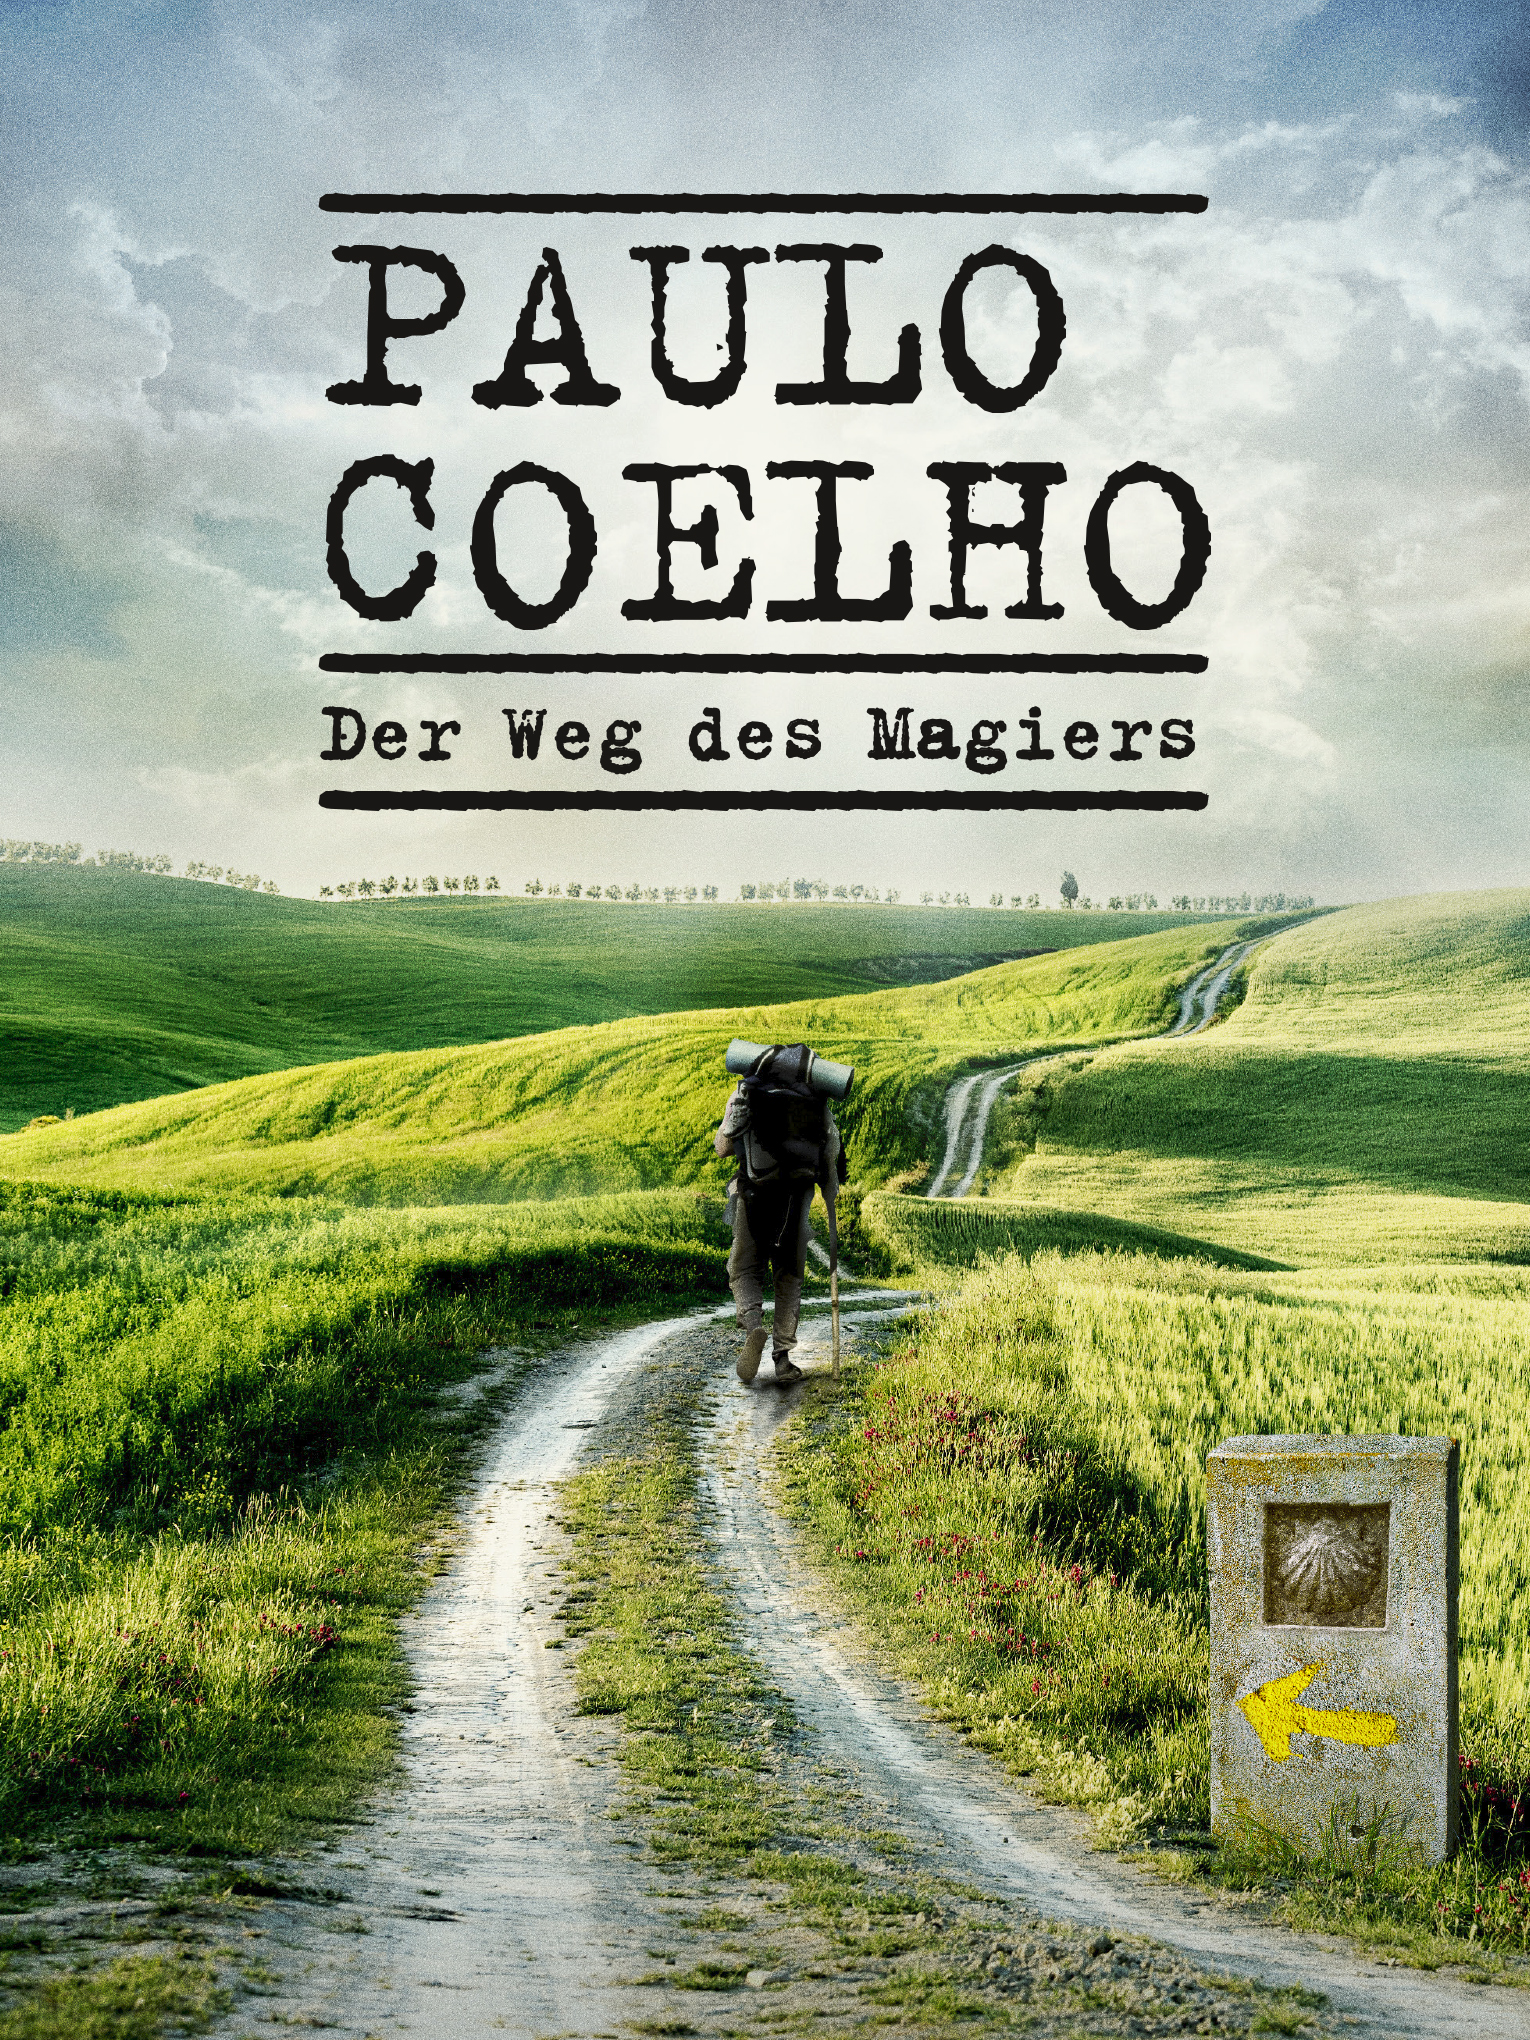 PAULO COELHO. Der Weg des Magiers.